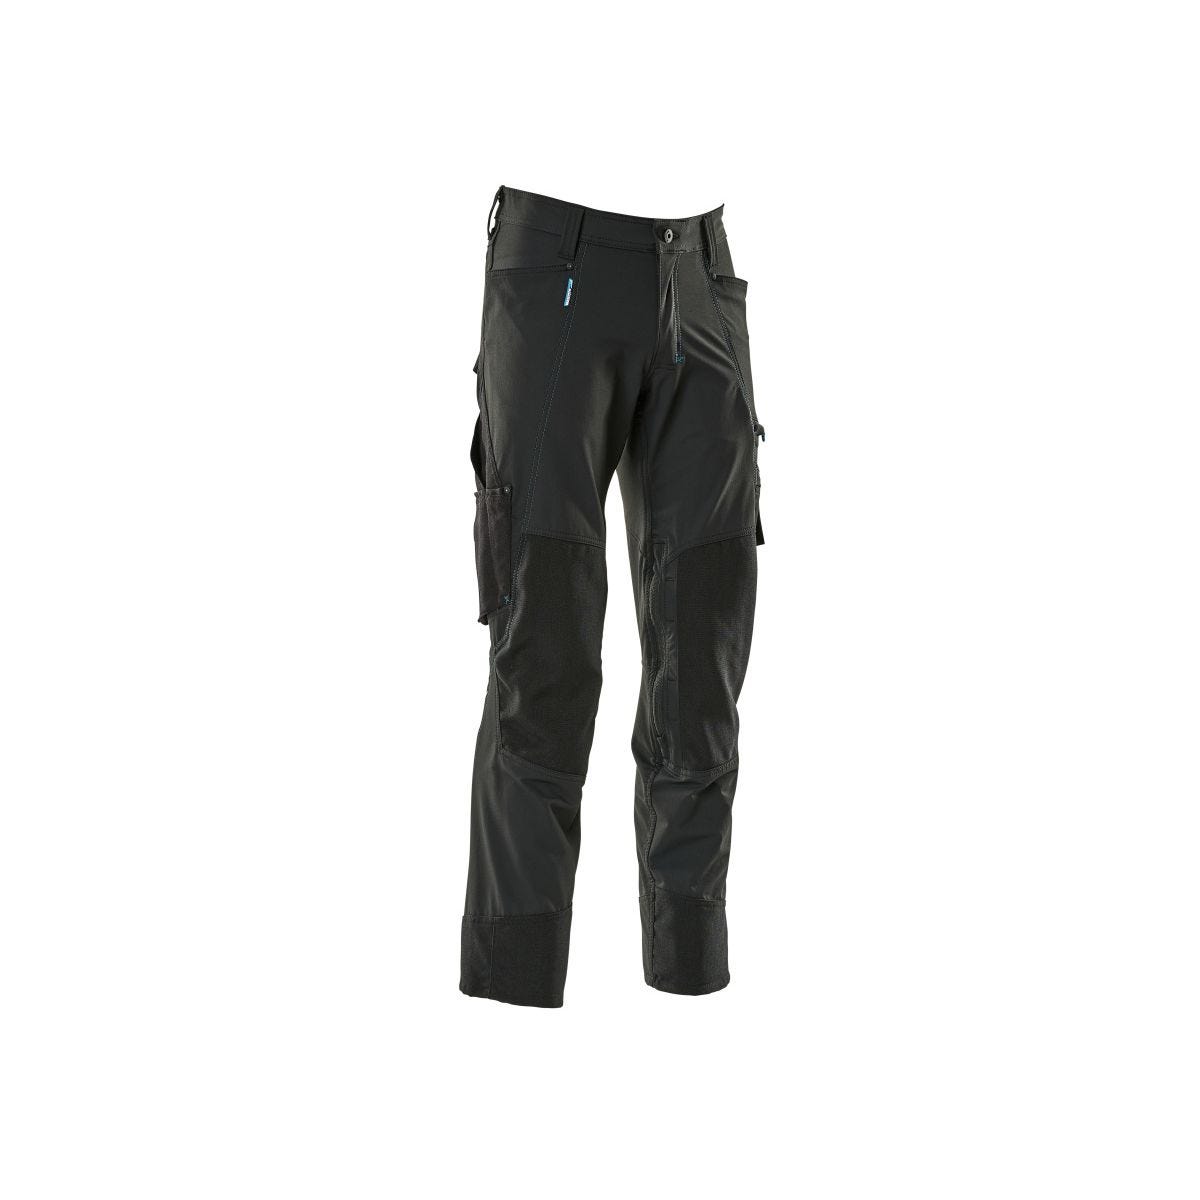 Pantalon avec poches genouillères ULTIMATE STRETCH Noir - Mascot - Taille W29.5/L32 1